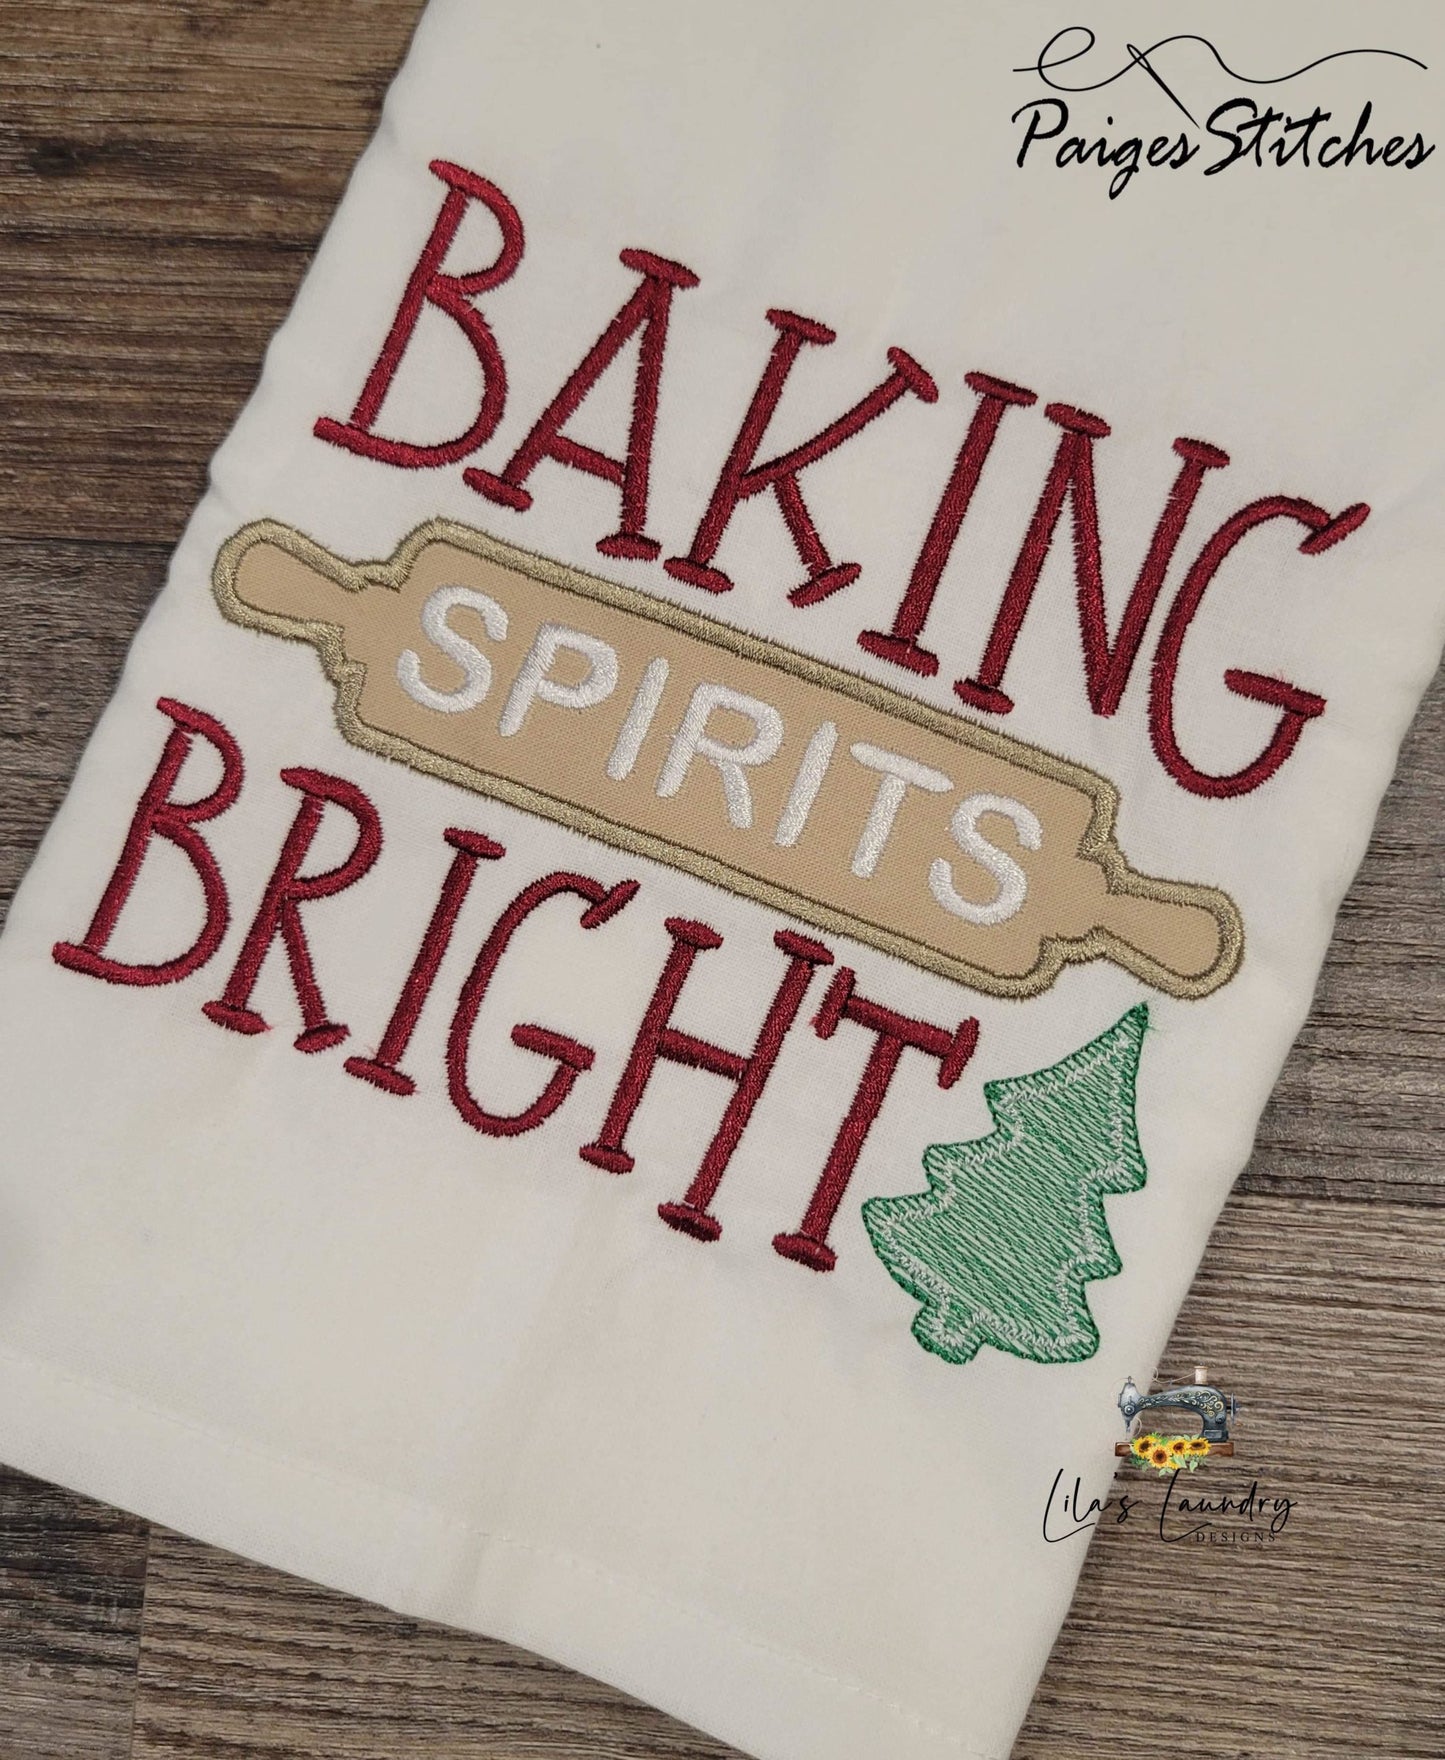 Baking Spirits Bright Applique - 3 sizes- Digital Embroidery Design